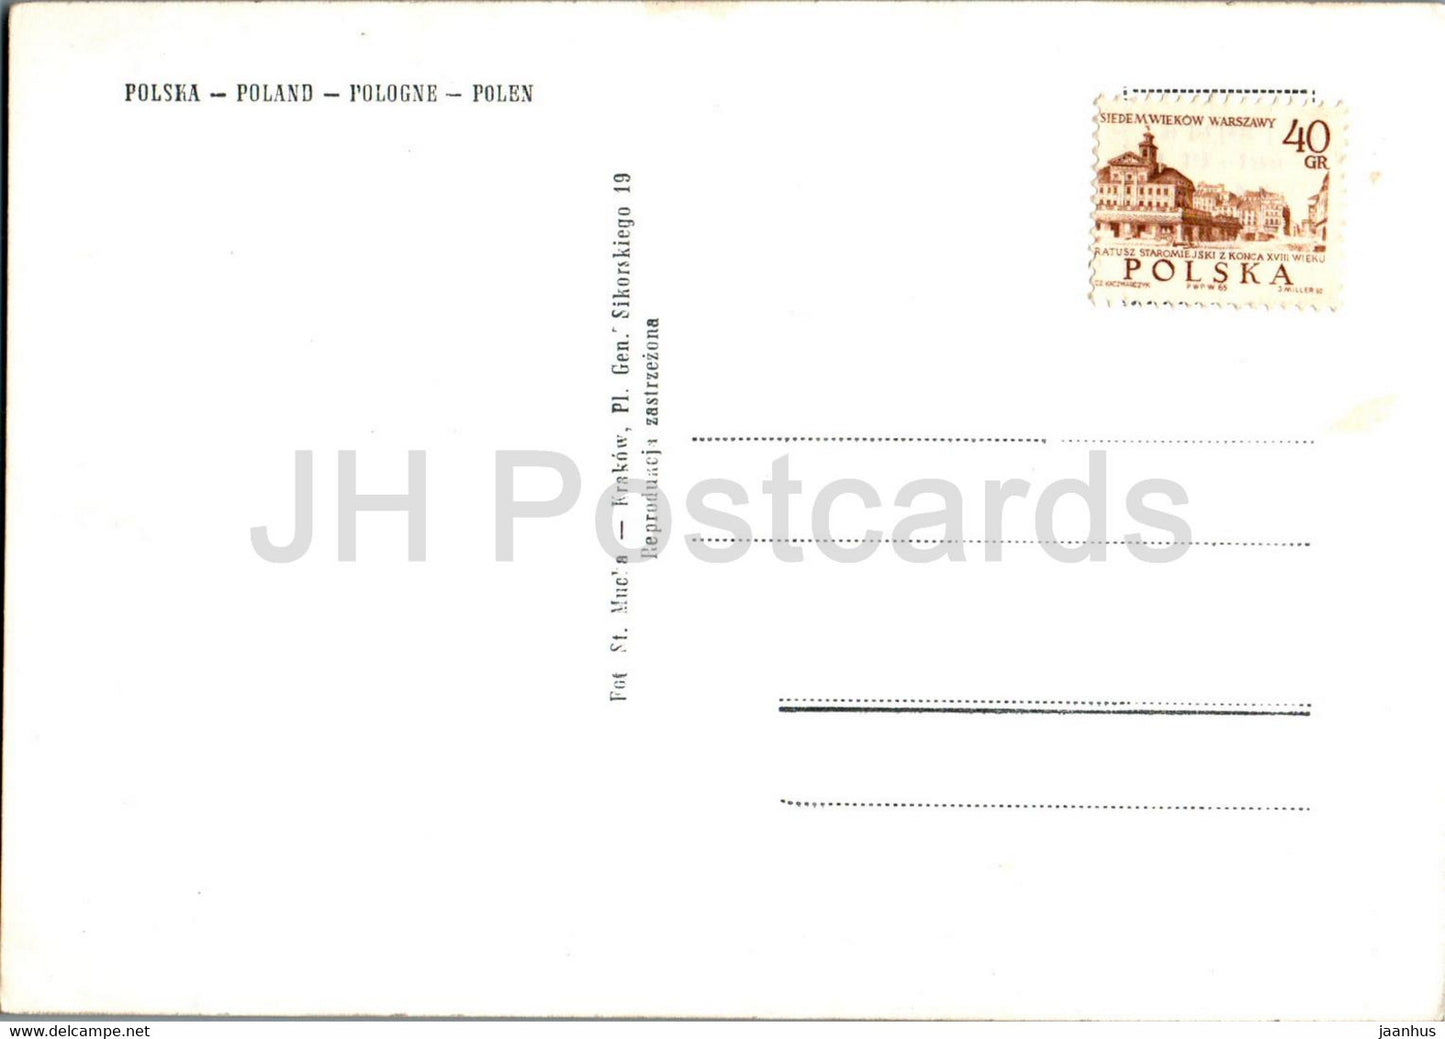 Krakau - Kosciol ND Marii w nocy spod arkad Sukiennic - Kirche der Heiligen Jungfrau Maria - alte Postkarte - Polen - unbenutzt